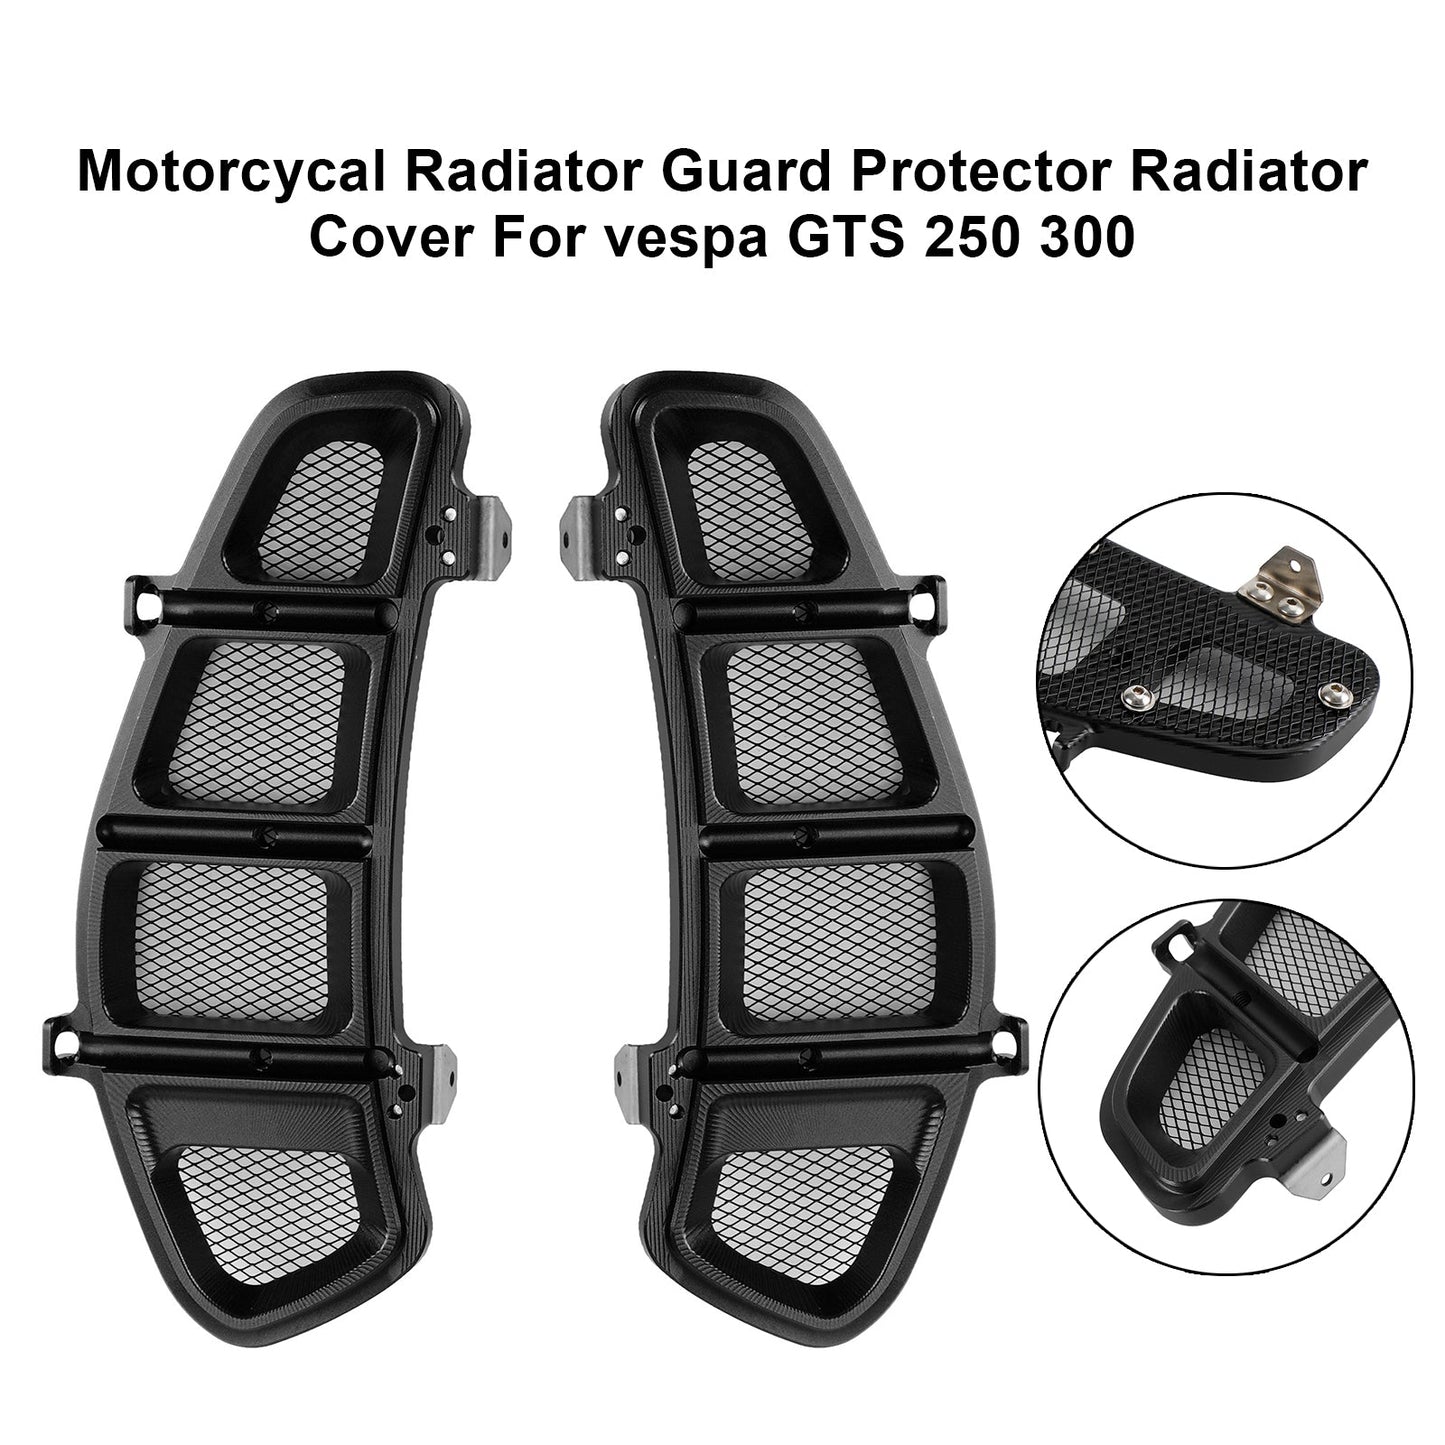 Motorcycal Radiator Guard Protector Radiator Cover Black For Vespa Gts 250 300